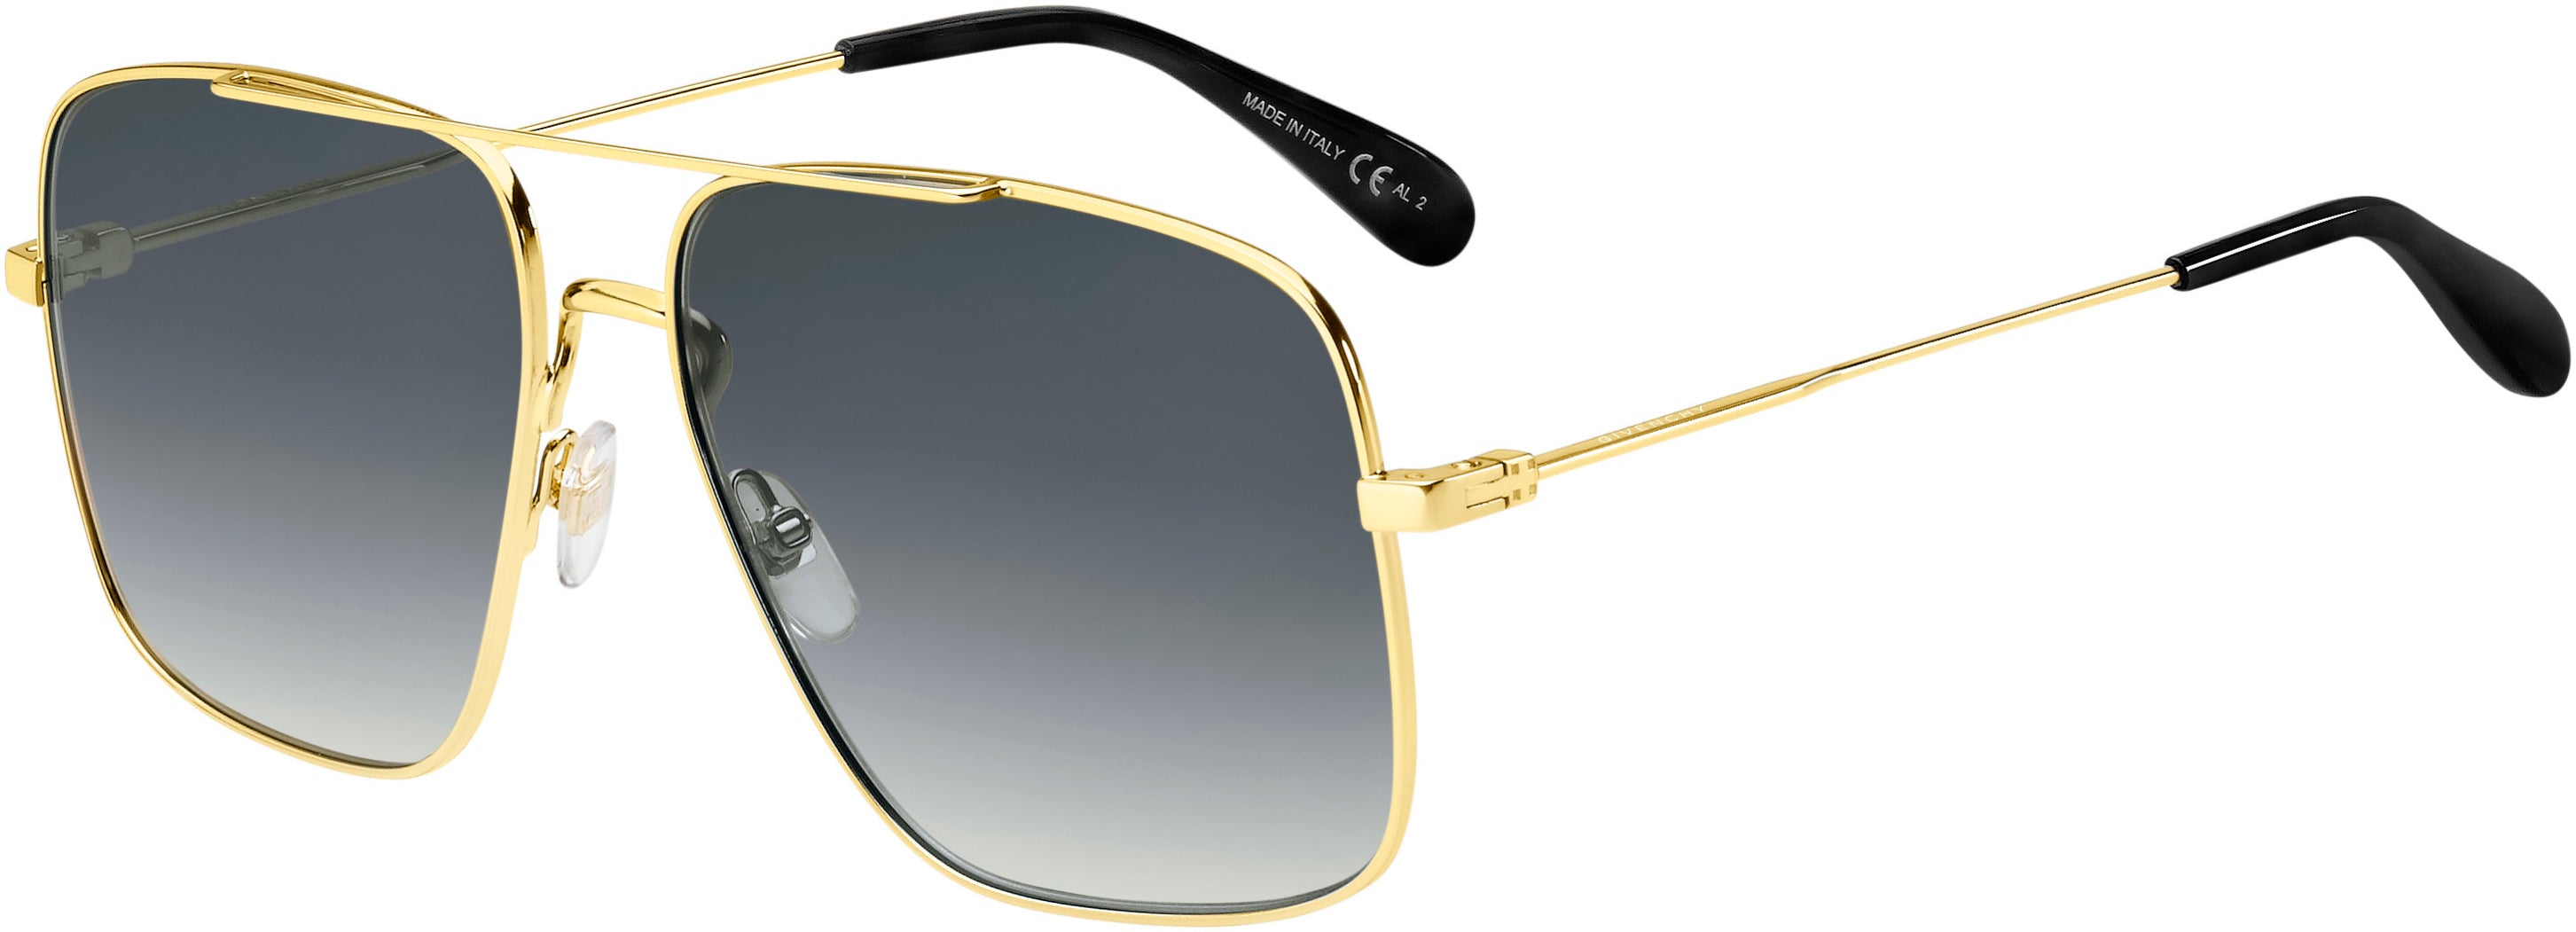  Givenchy 7119/S Navigator Sunglasses 0J5G-0J5G  Gold (9O Dark Gray Gradient)